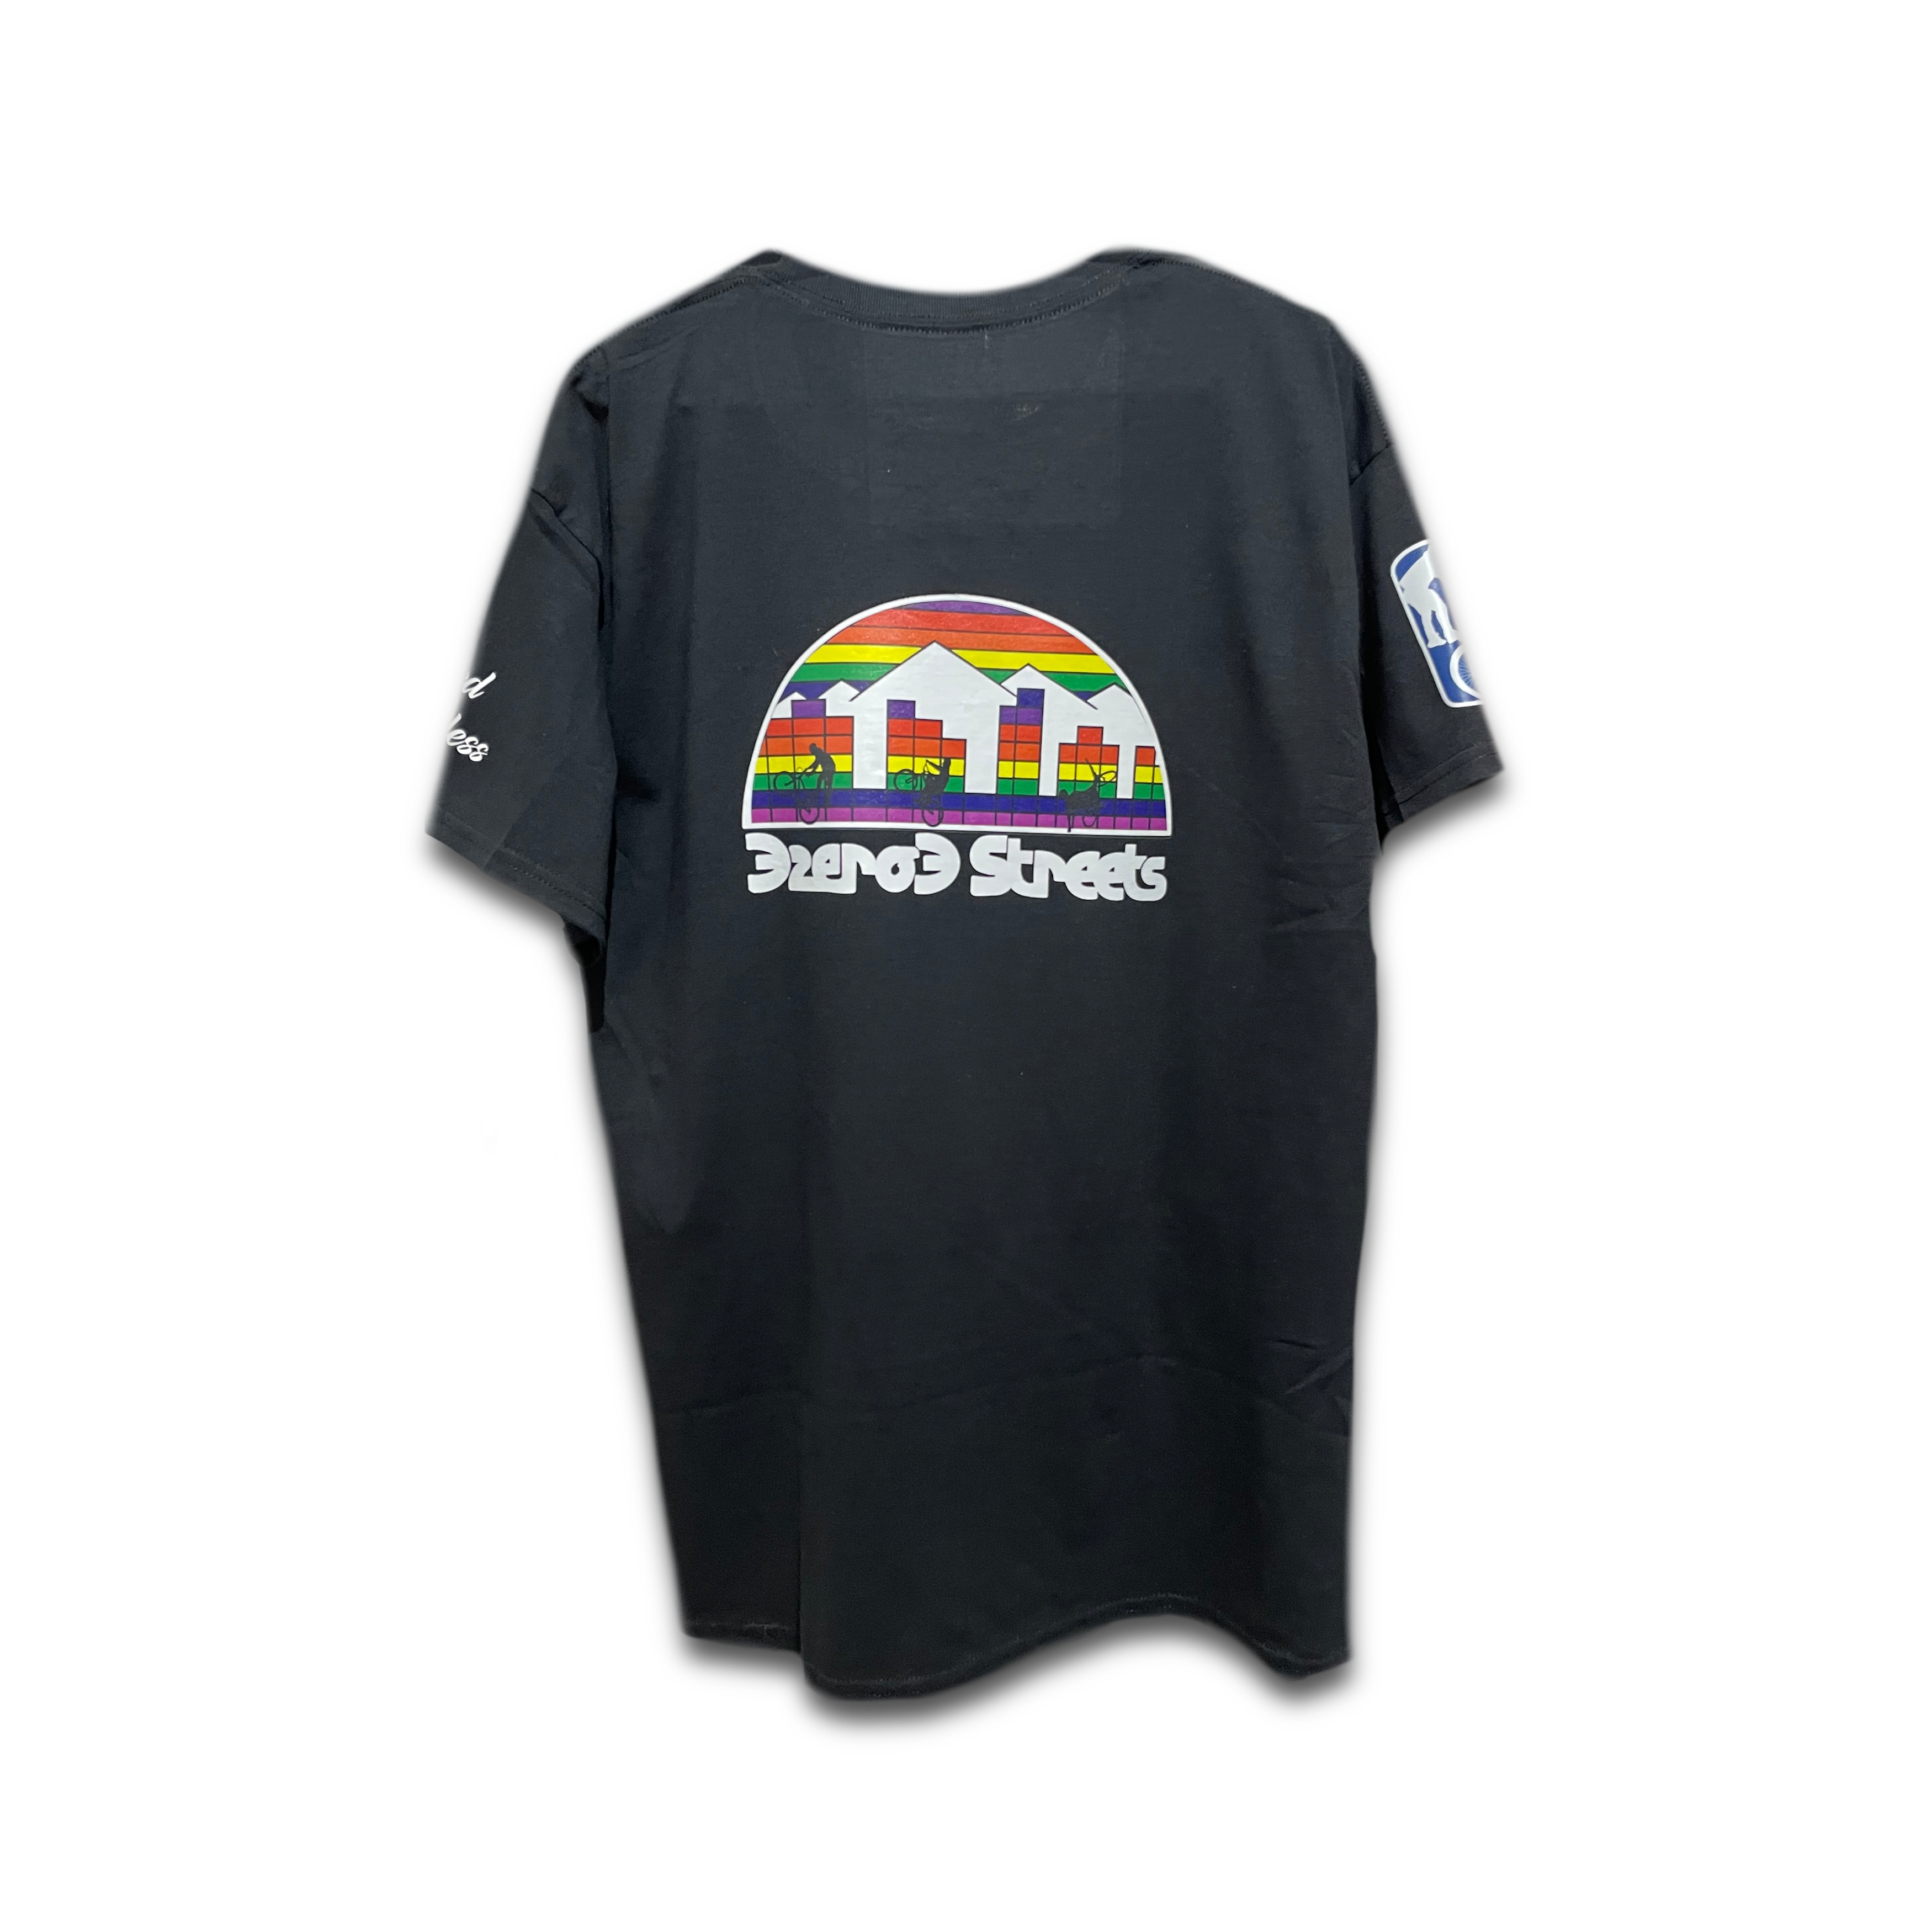 3zero3 Retro nugs t-Shirt